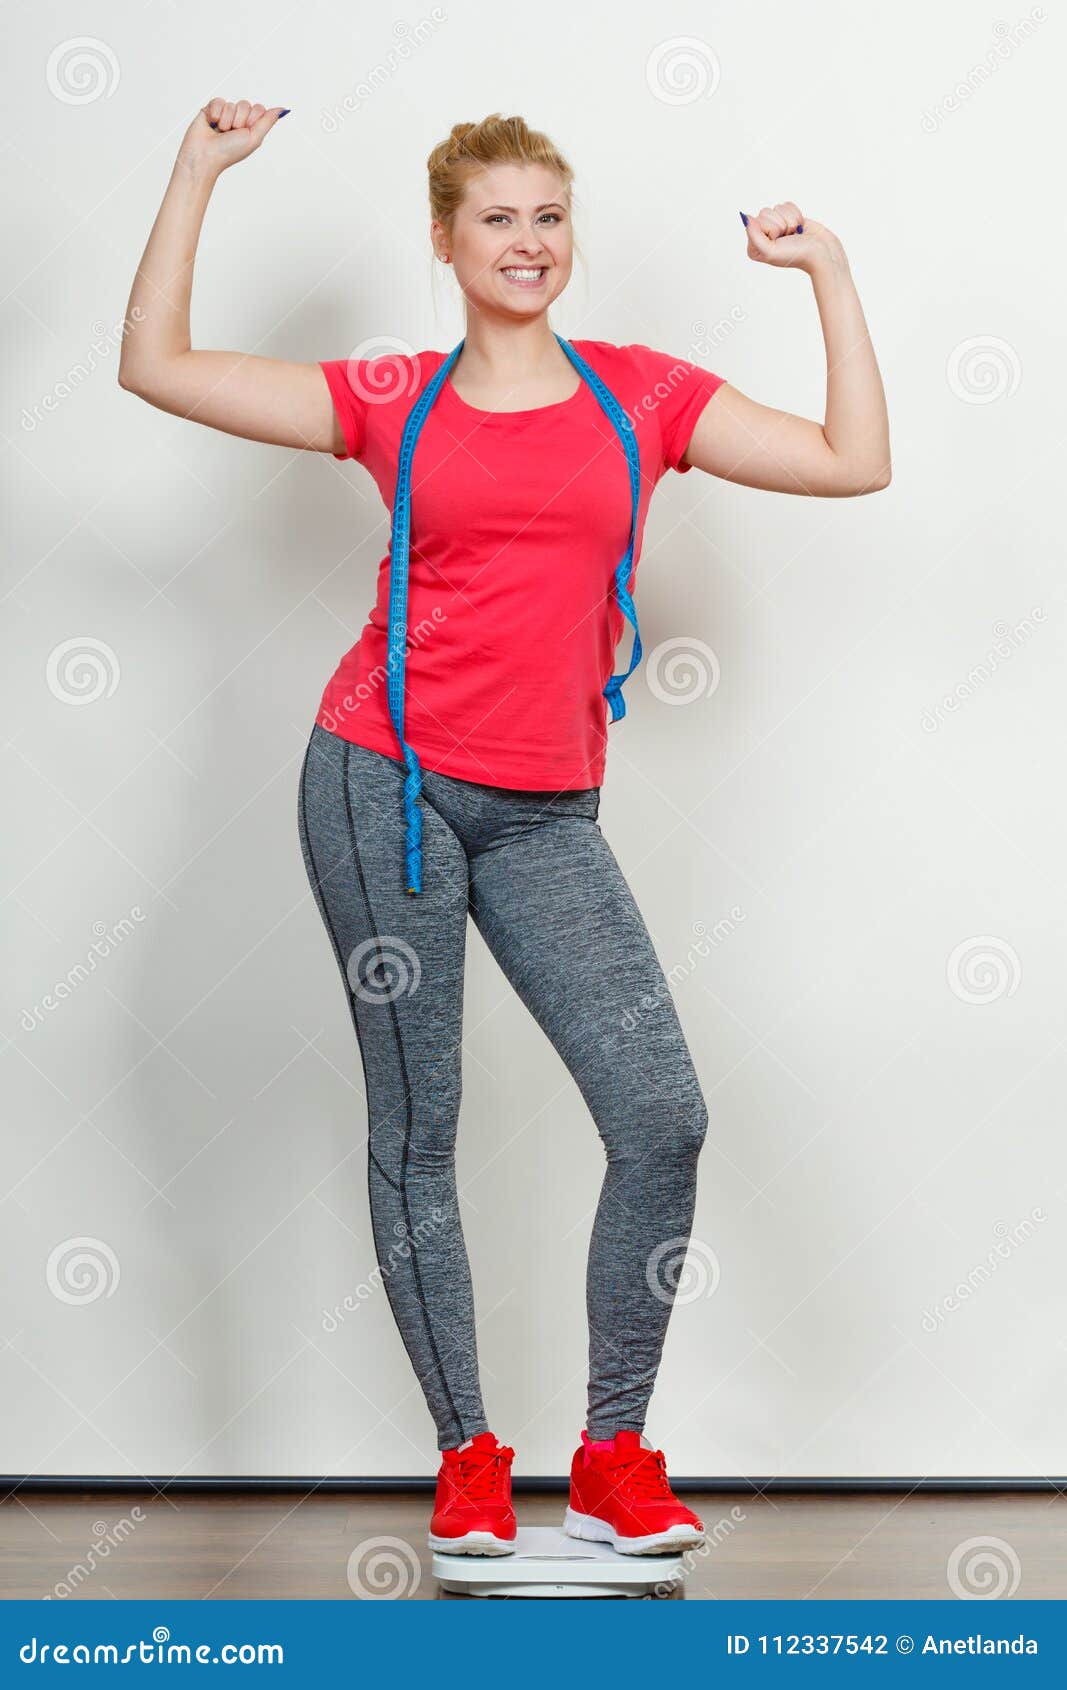 Woman Wearing Sportswear Standing on Weight Machine Stock Photo - Image ...